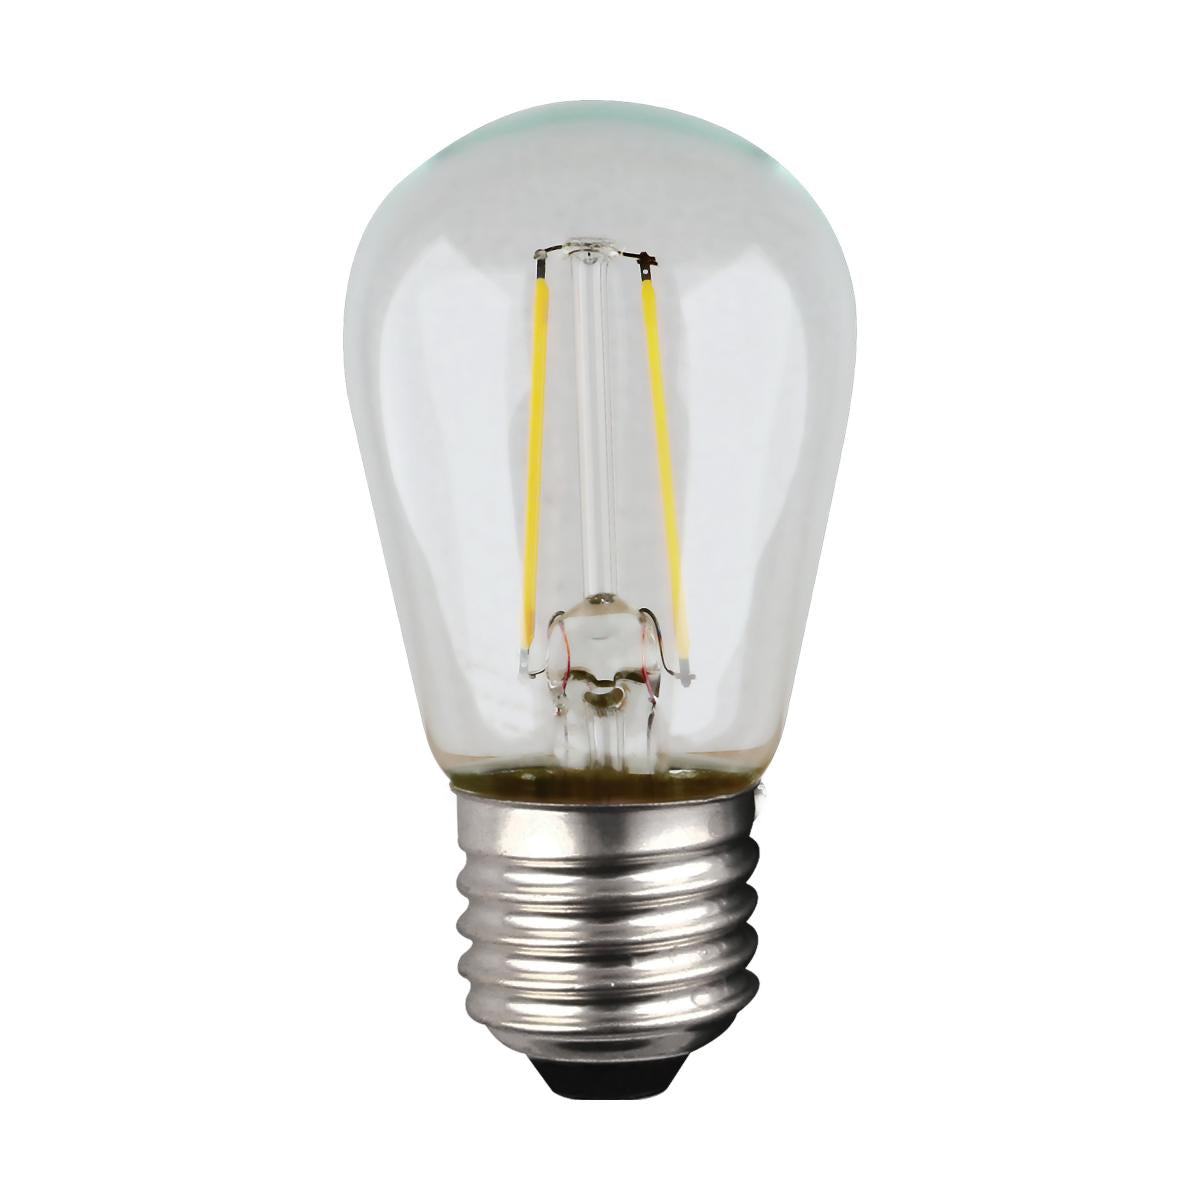 Satco S8021 1WS14/LED/CL/27K/120V/ND/4PK S14 LED String Light Replacement Bulb 2700K 120 Volt Replacement 4-pack